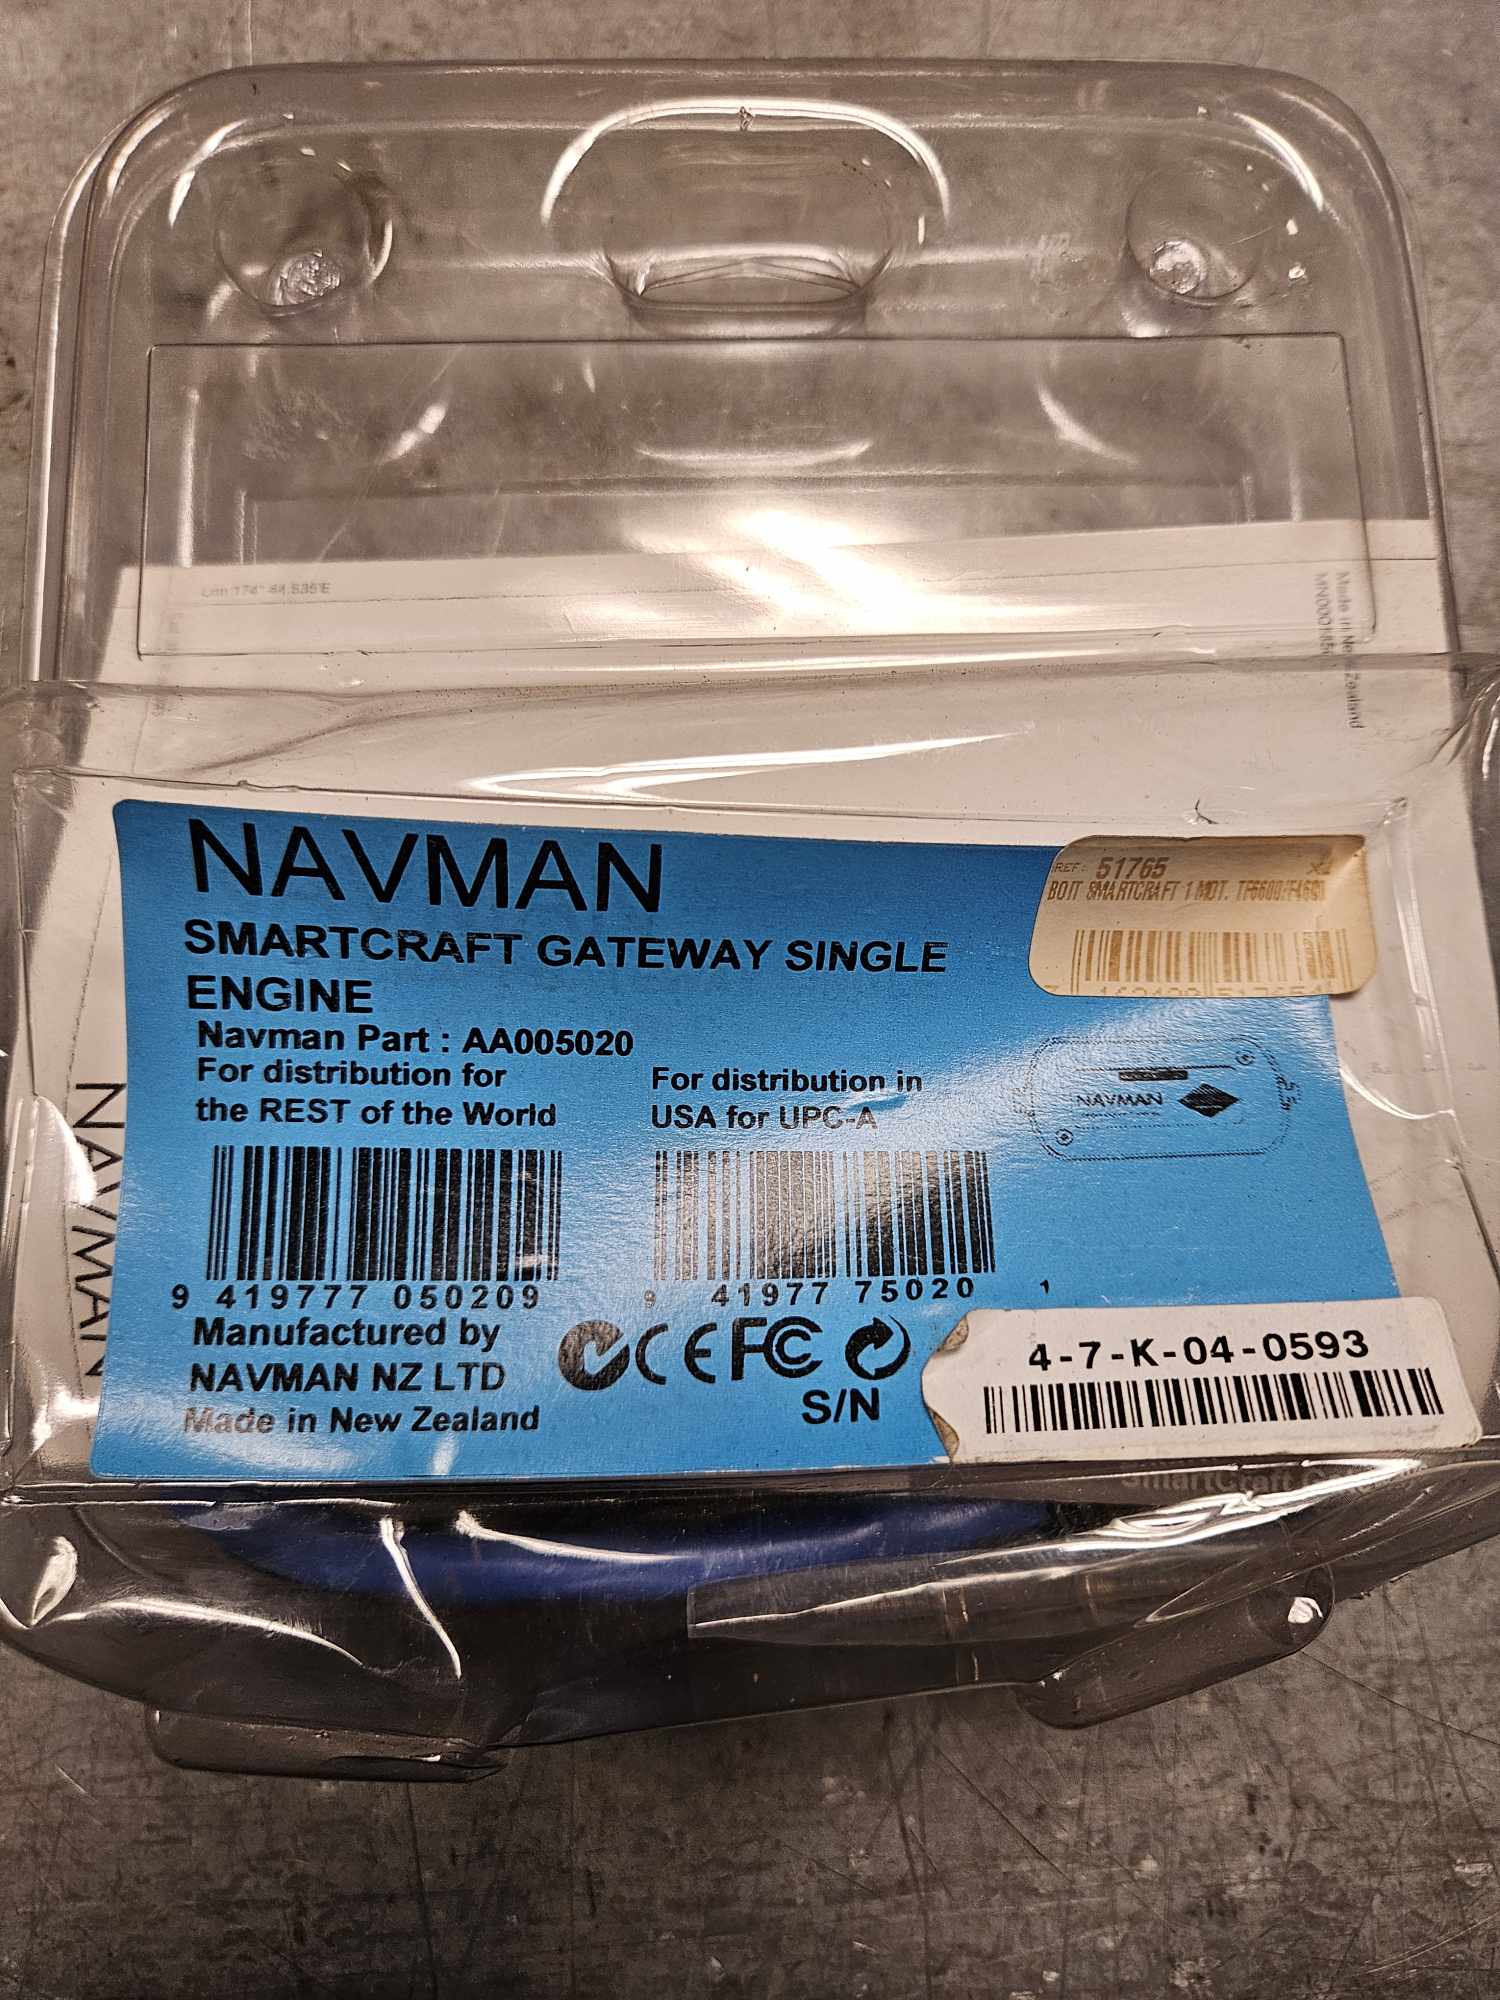 Smartcraft gateway single engine Navman